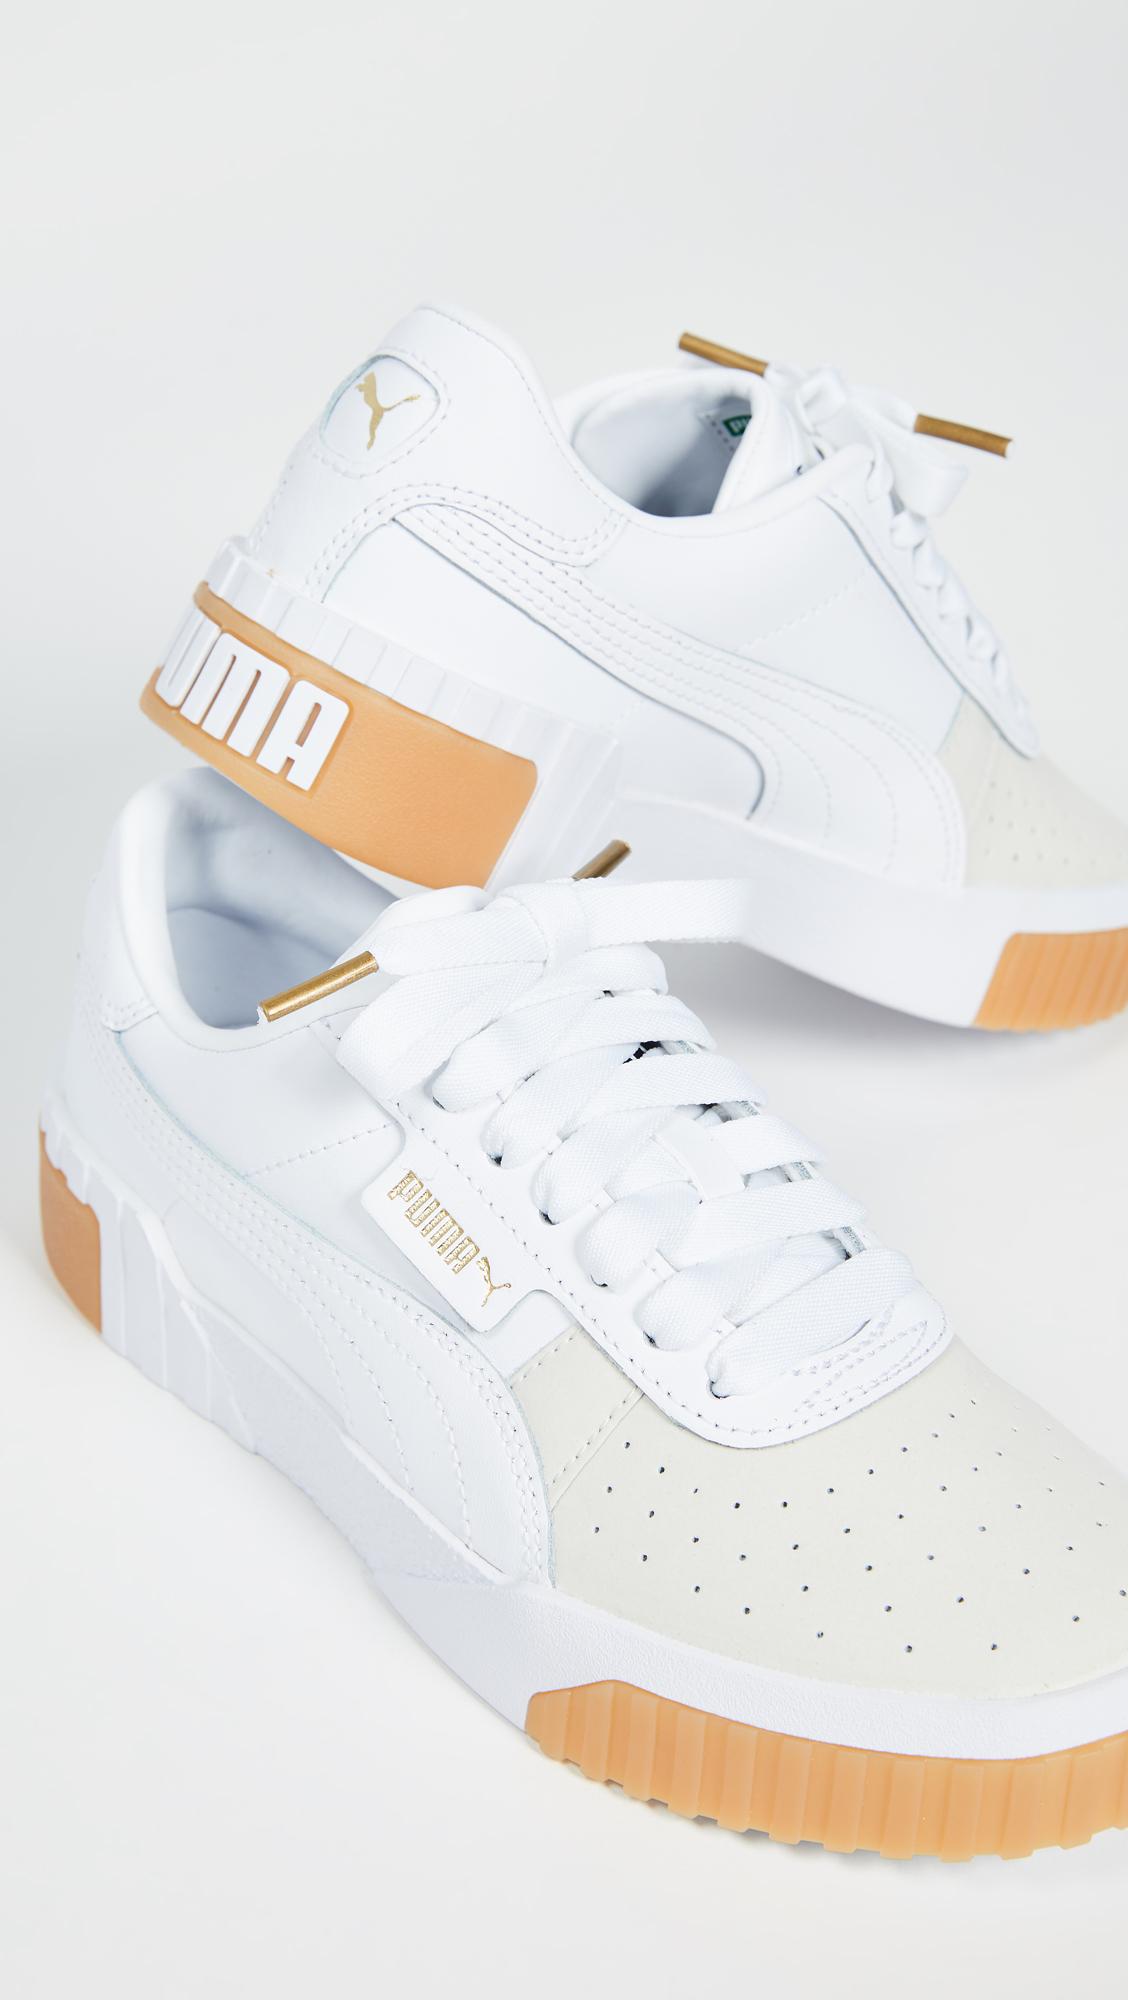 PUMA Cali Exotic Sneakers in White | Lyst